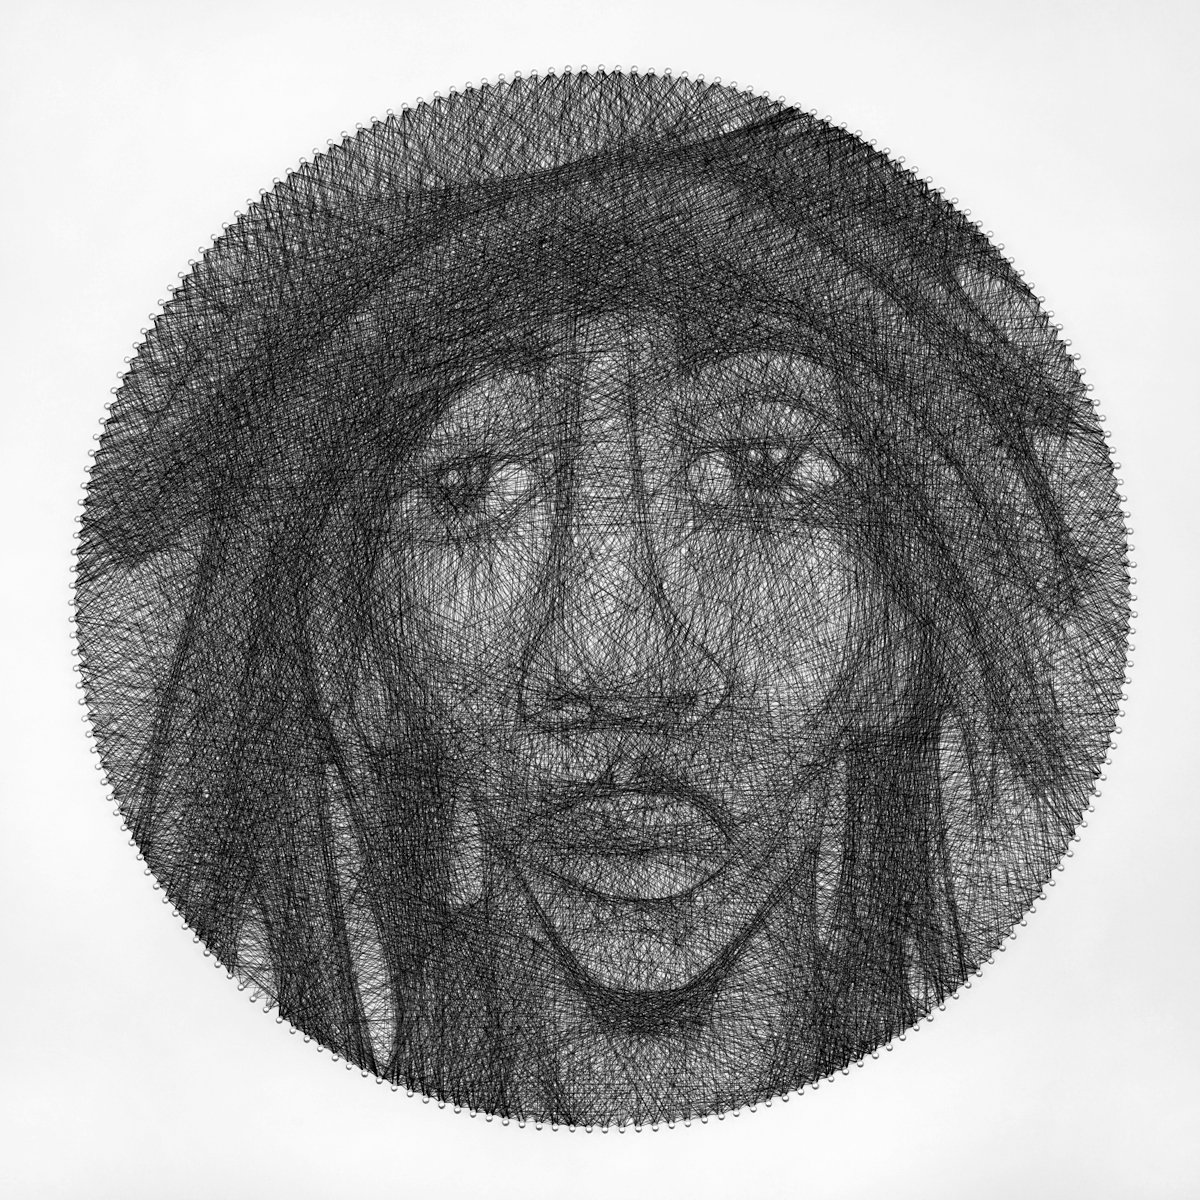 Bob Marley string art portrait by Andrey Saharov